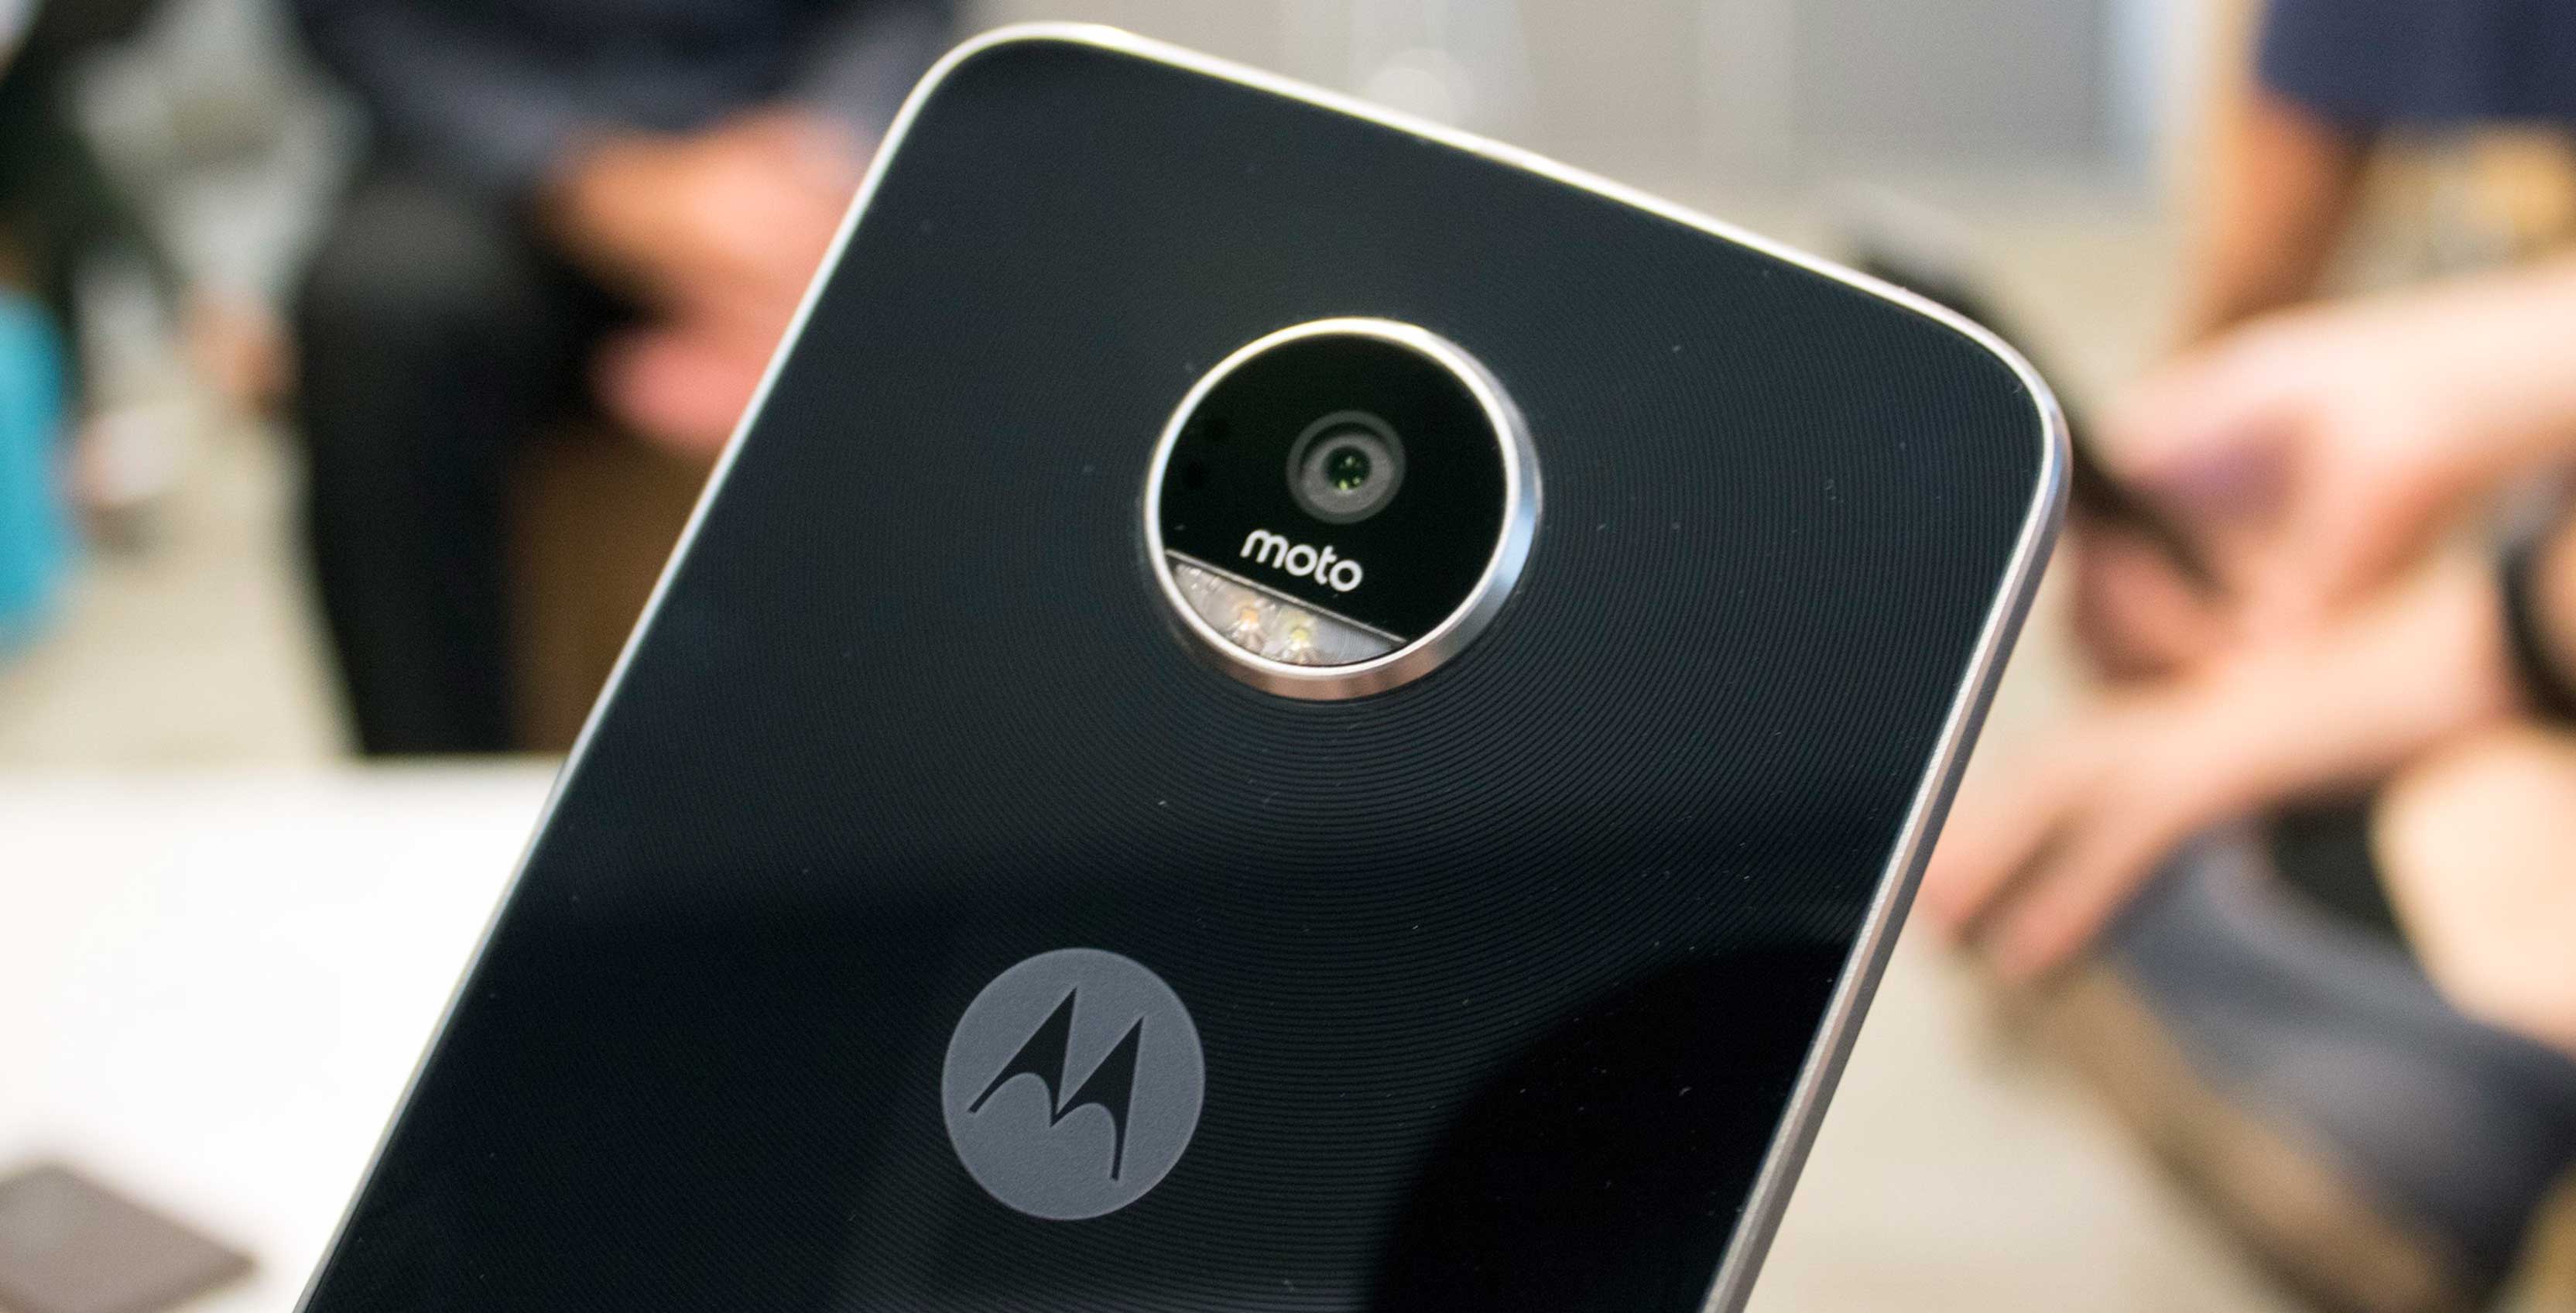 Motorola logo on phone